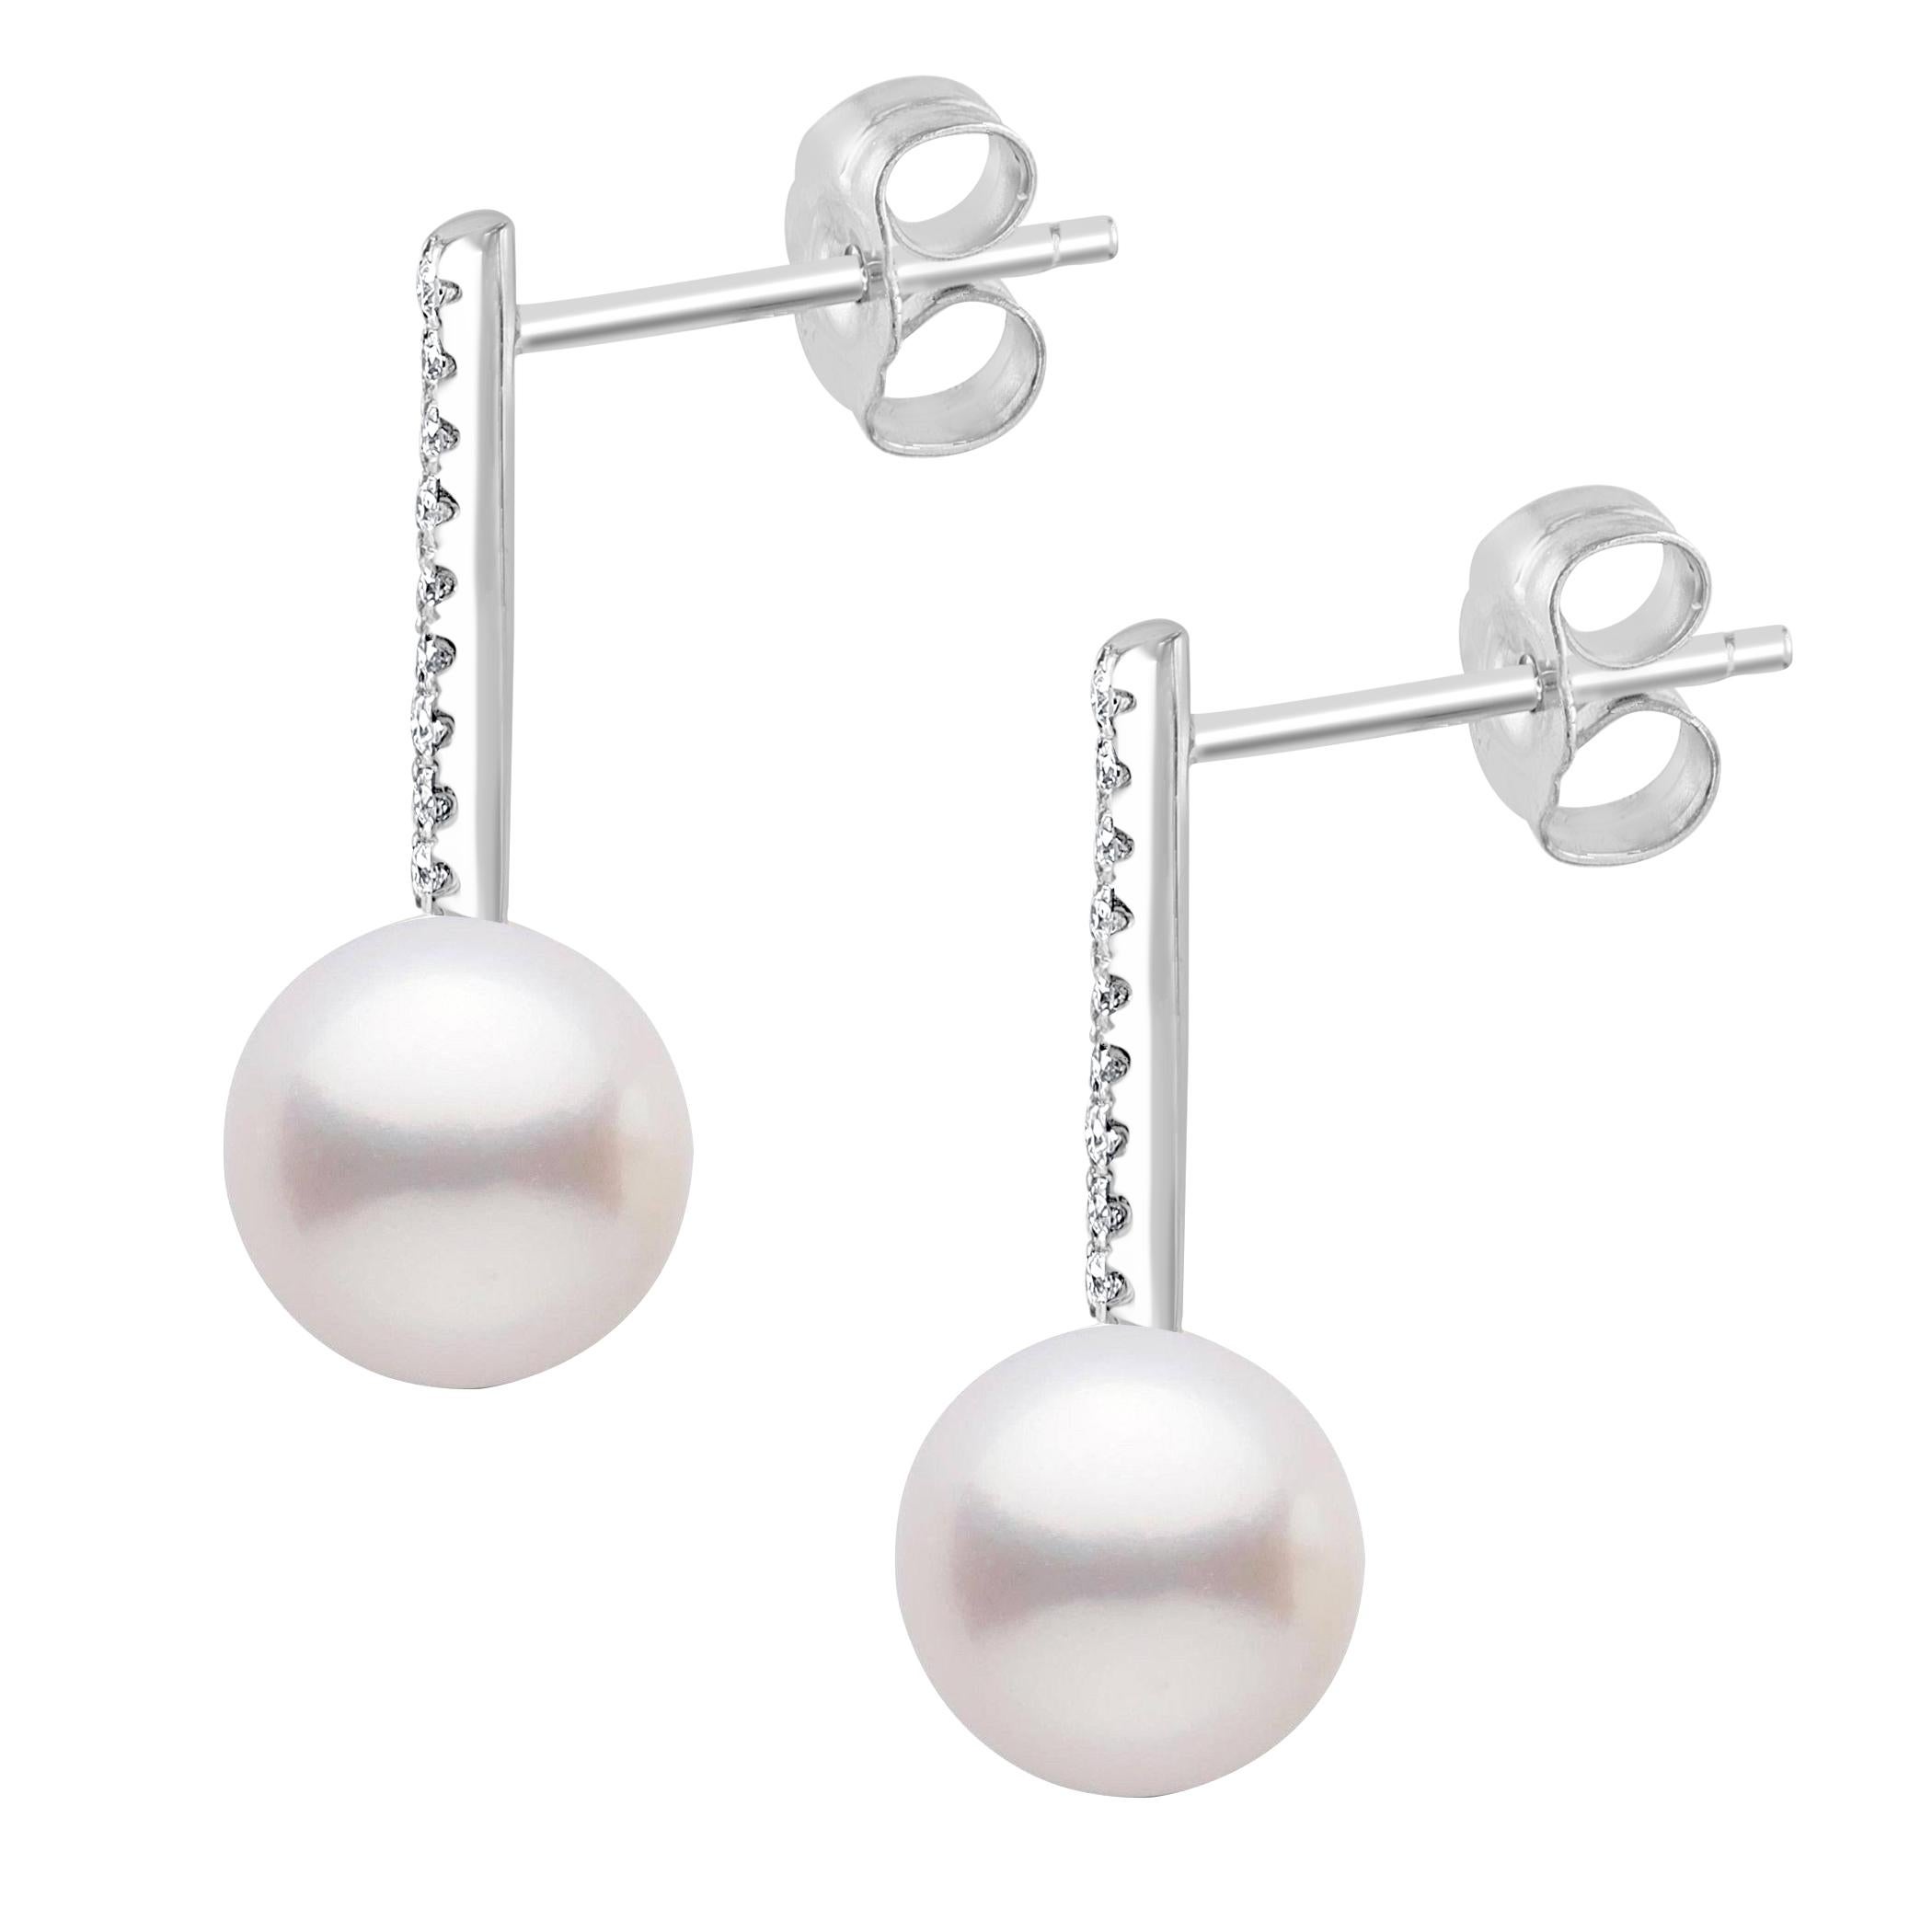 hanging bar earrings